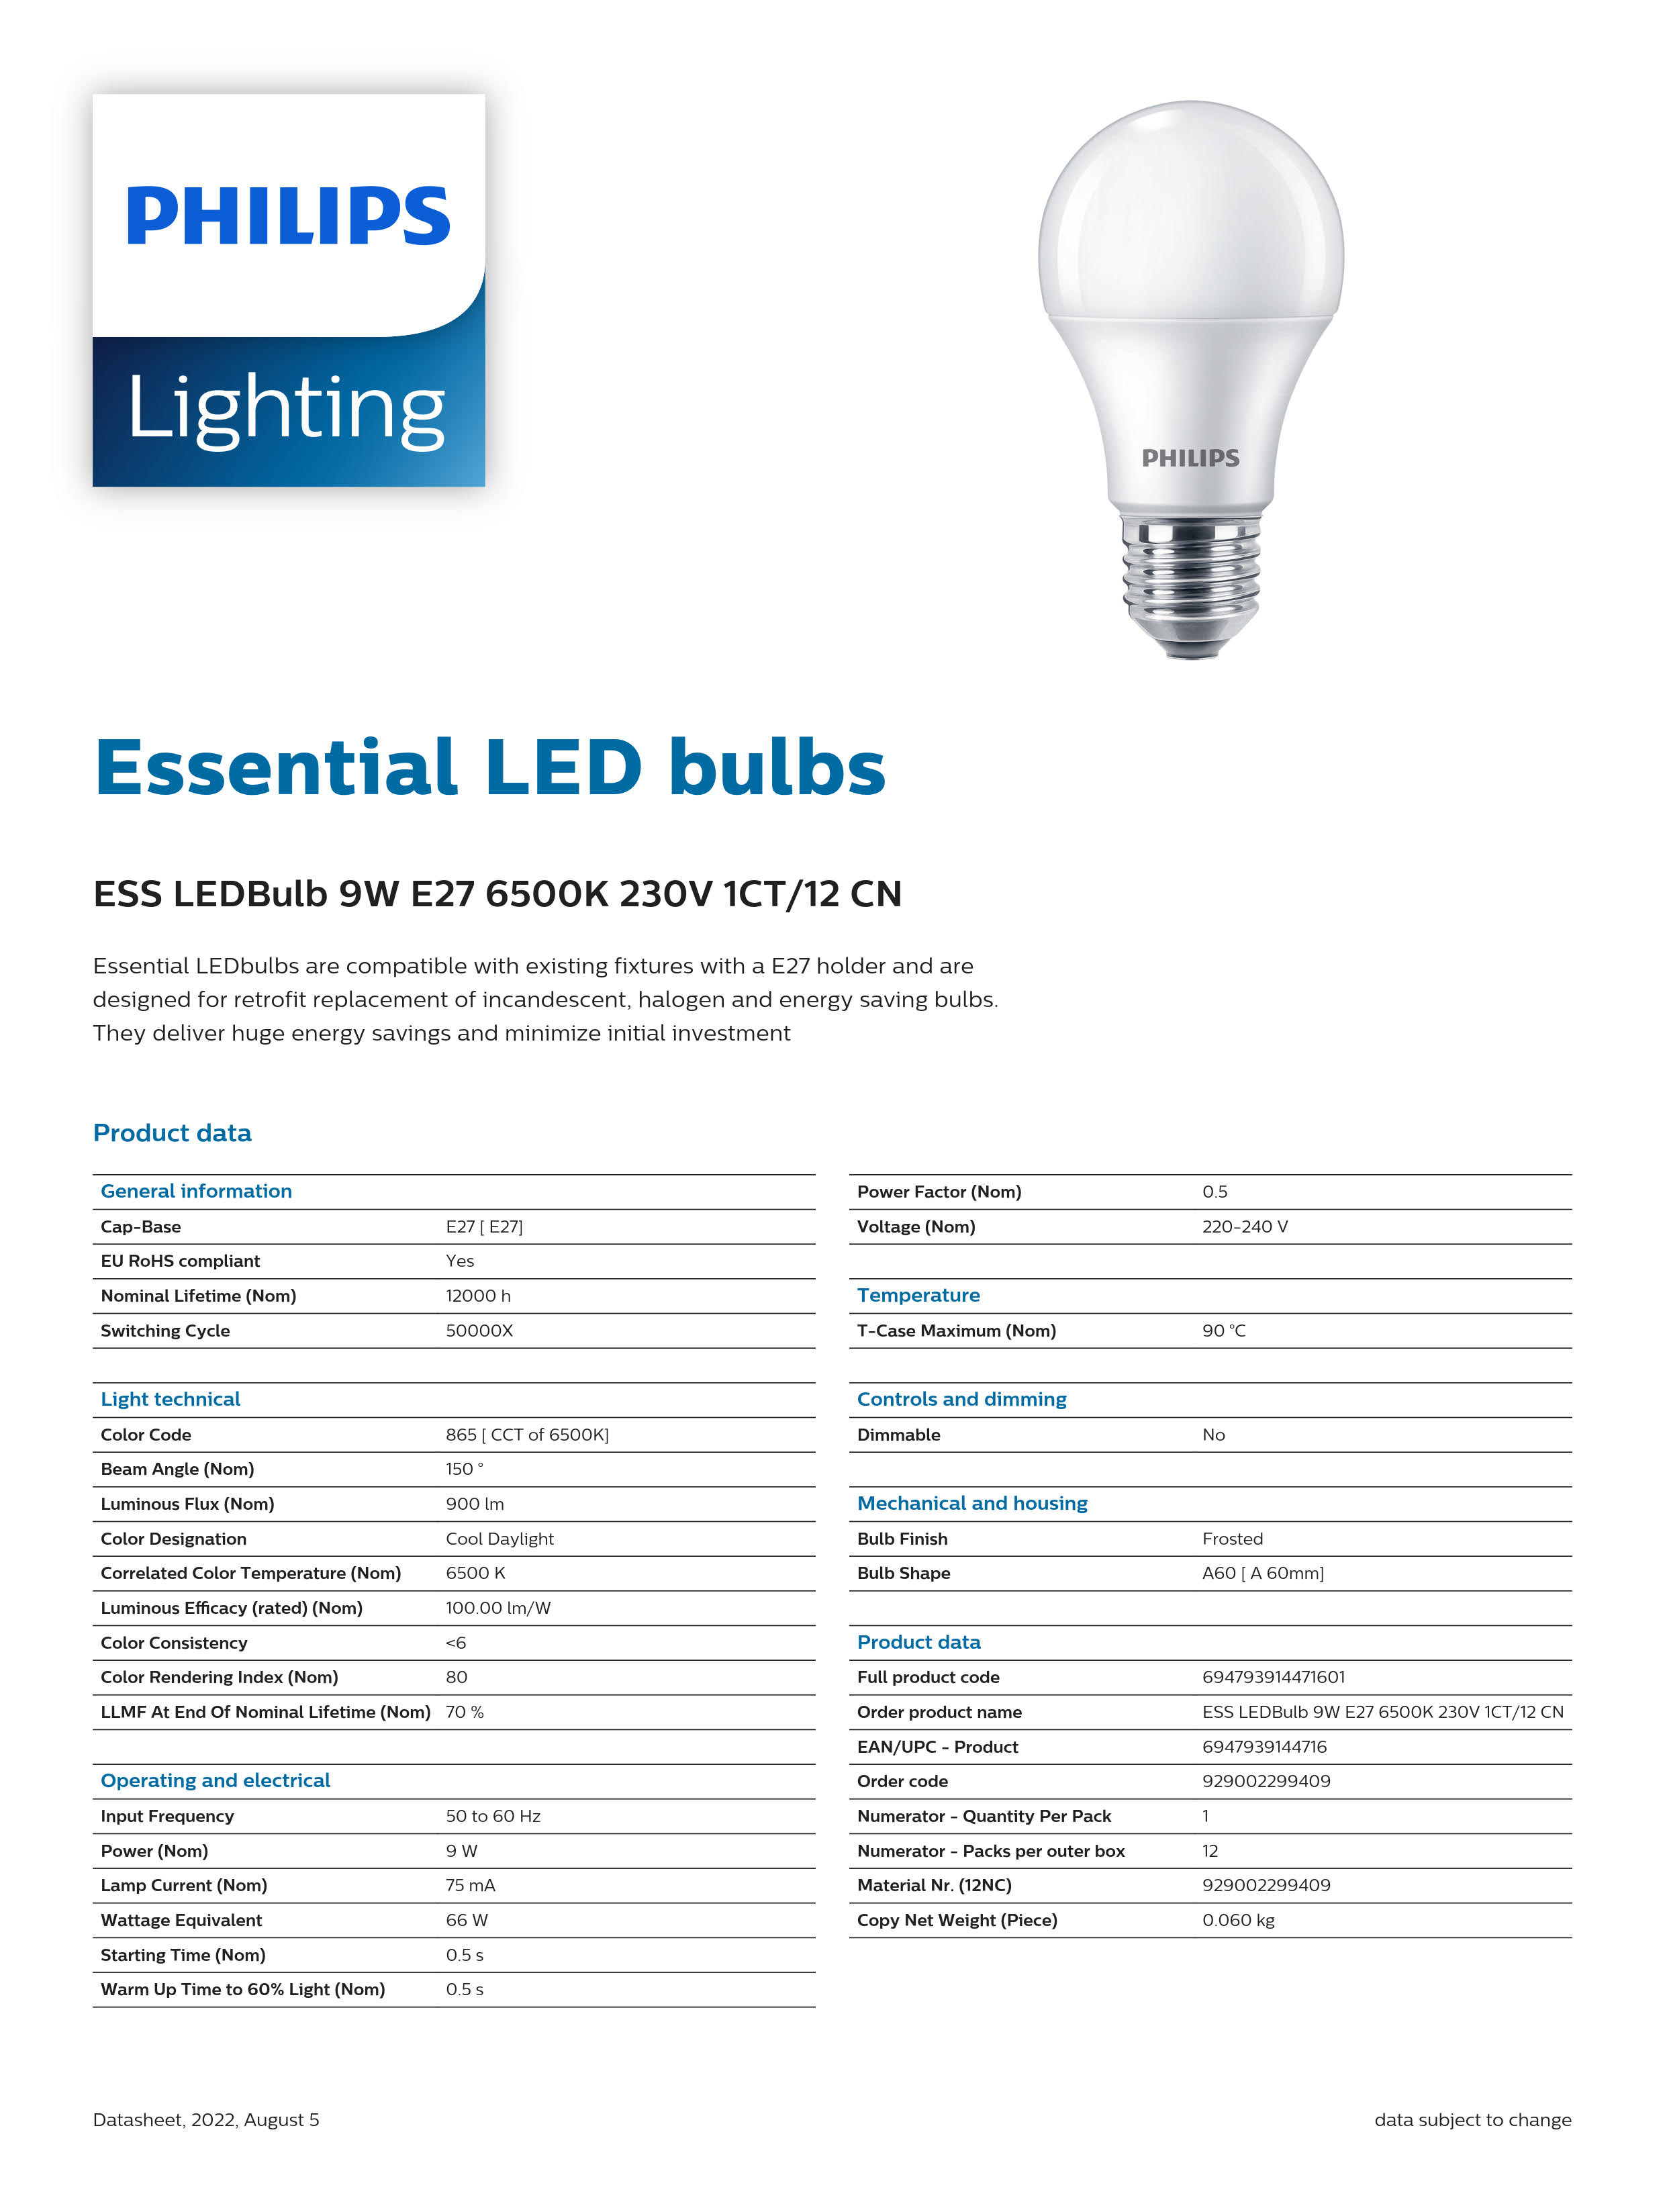 PHILIPS Essential LED bulbs 9W E27 6500K 230V 1CT/12 CN 929002299409